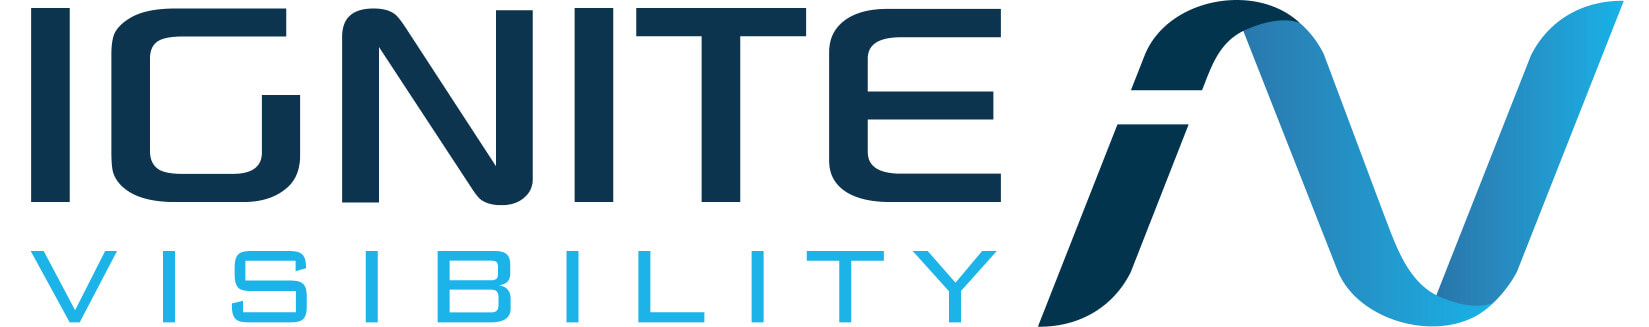 Top Real Estate SEO Agency Logo: Ignite Visibility